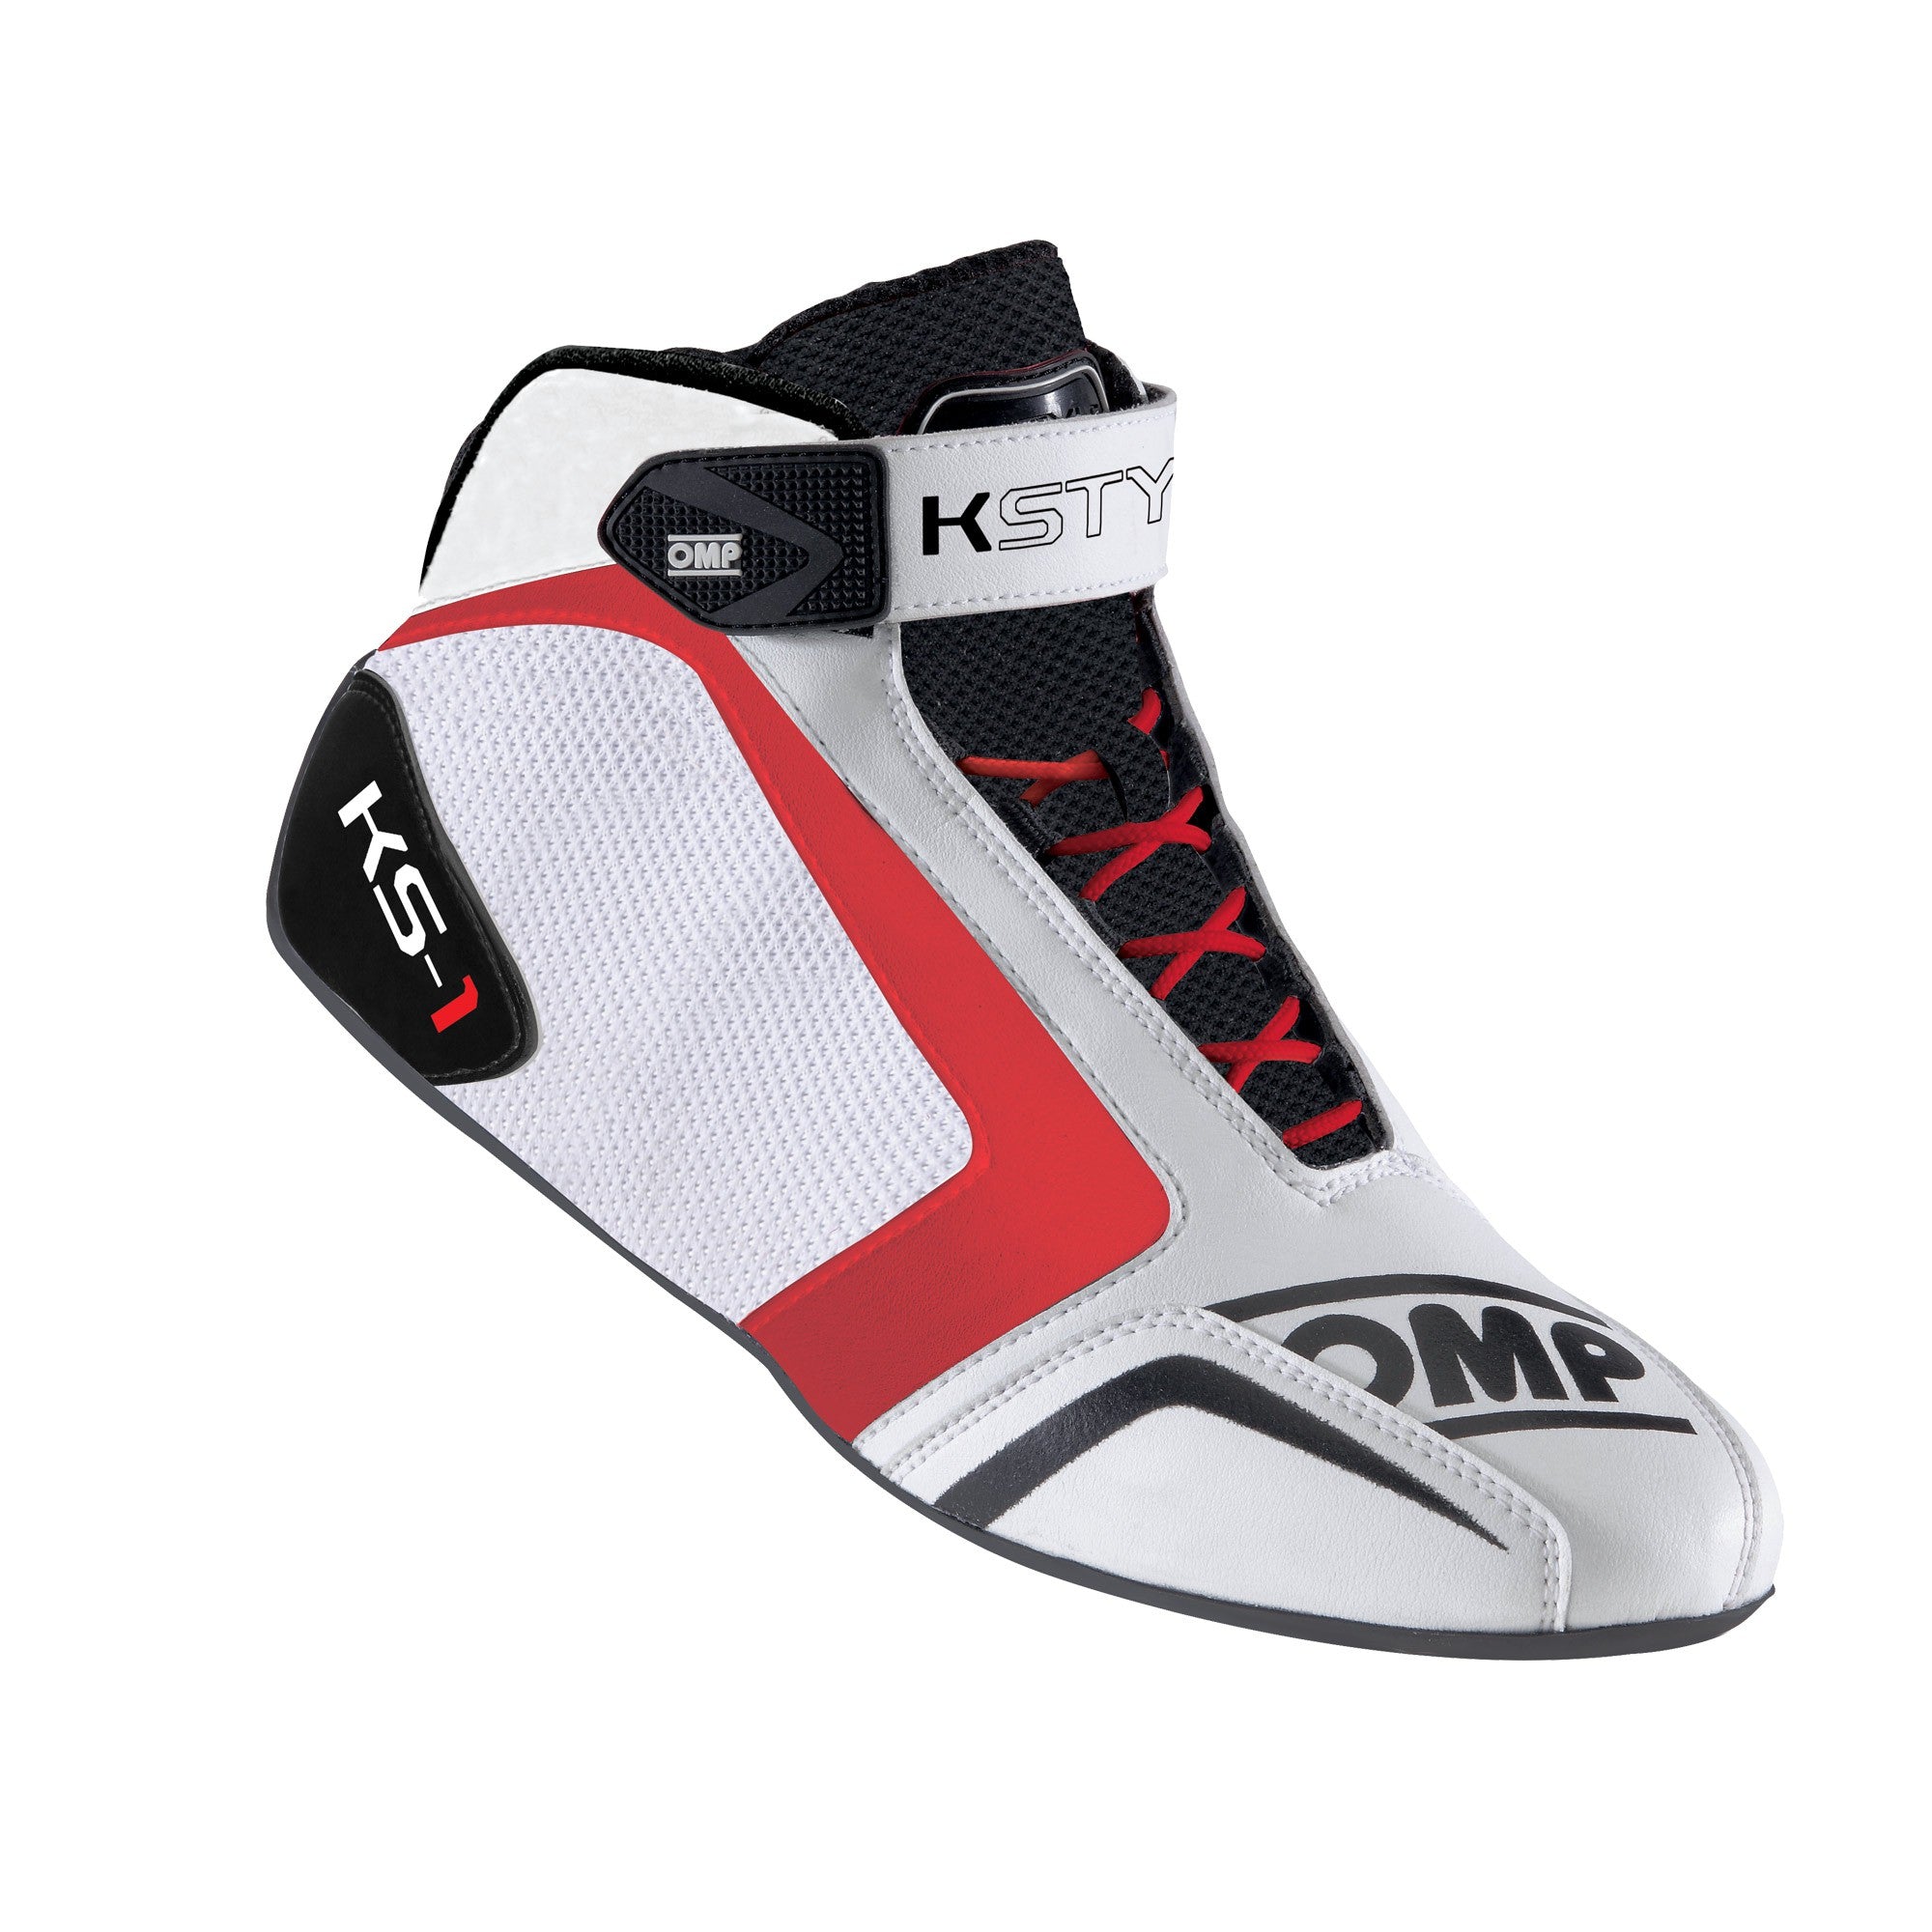 OMP KC0-0815-A01-120-42 (IC/81512042) Kart shoes KS-1, white/black/red, size 42 Photo-0 